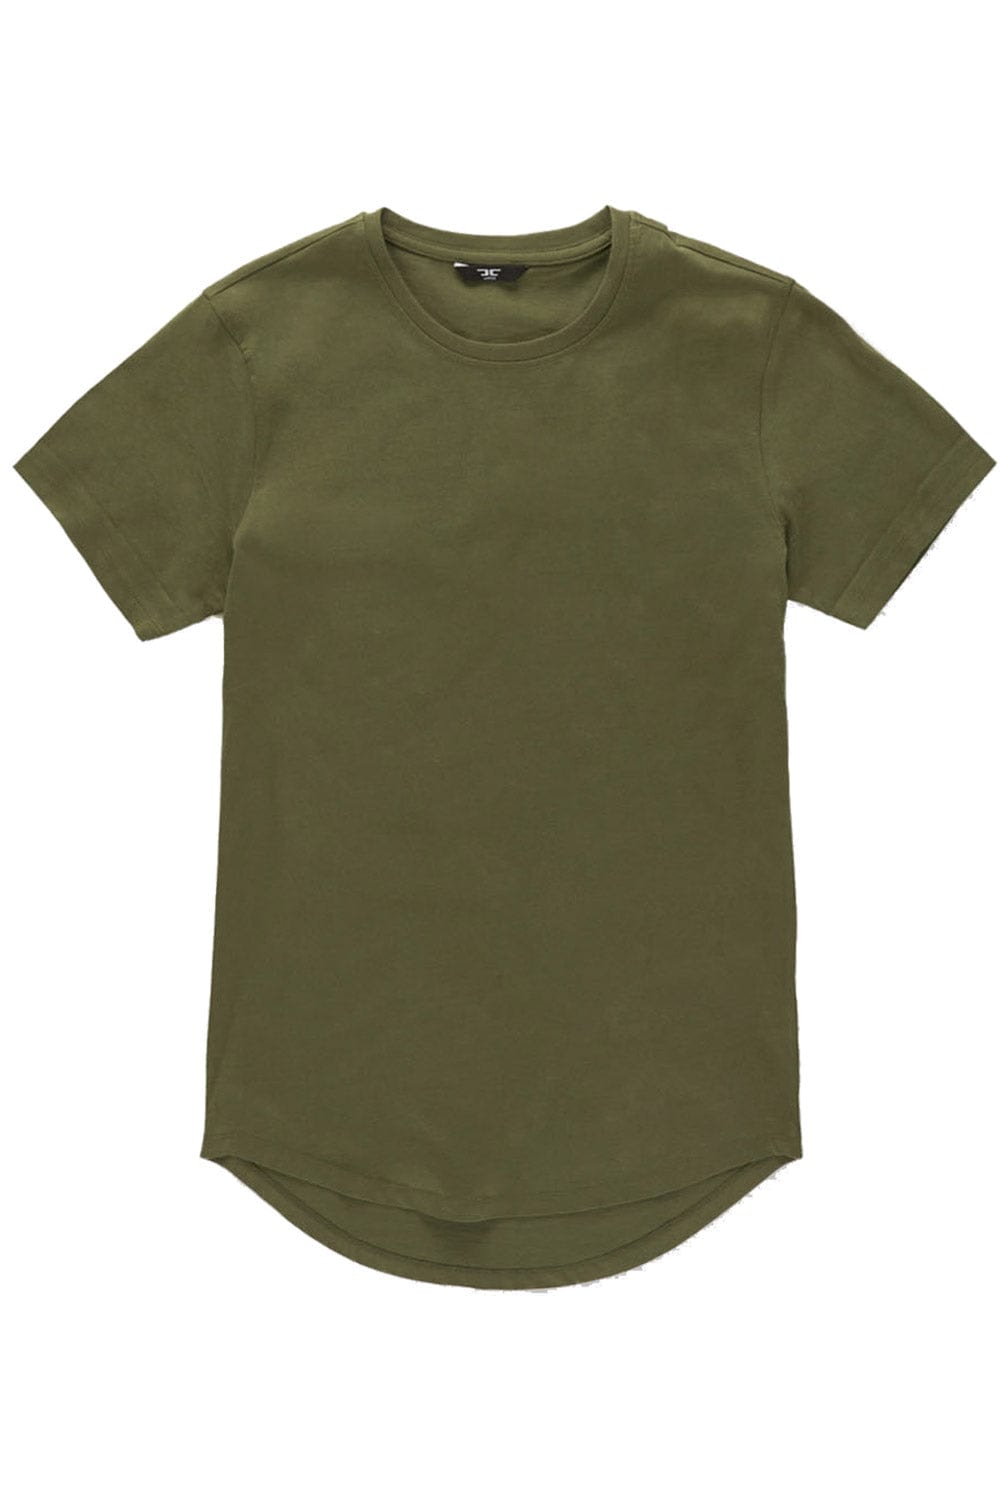 Jordan Craig Scallop T-Shirt Army Green / S